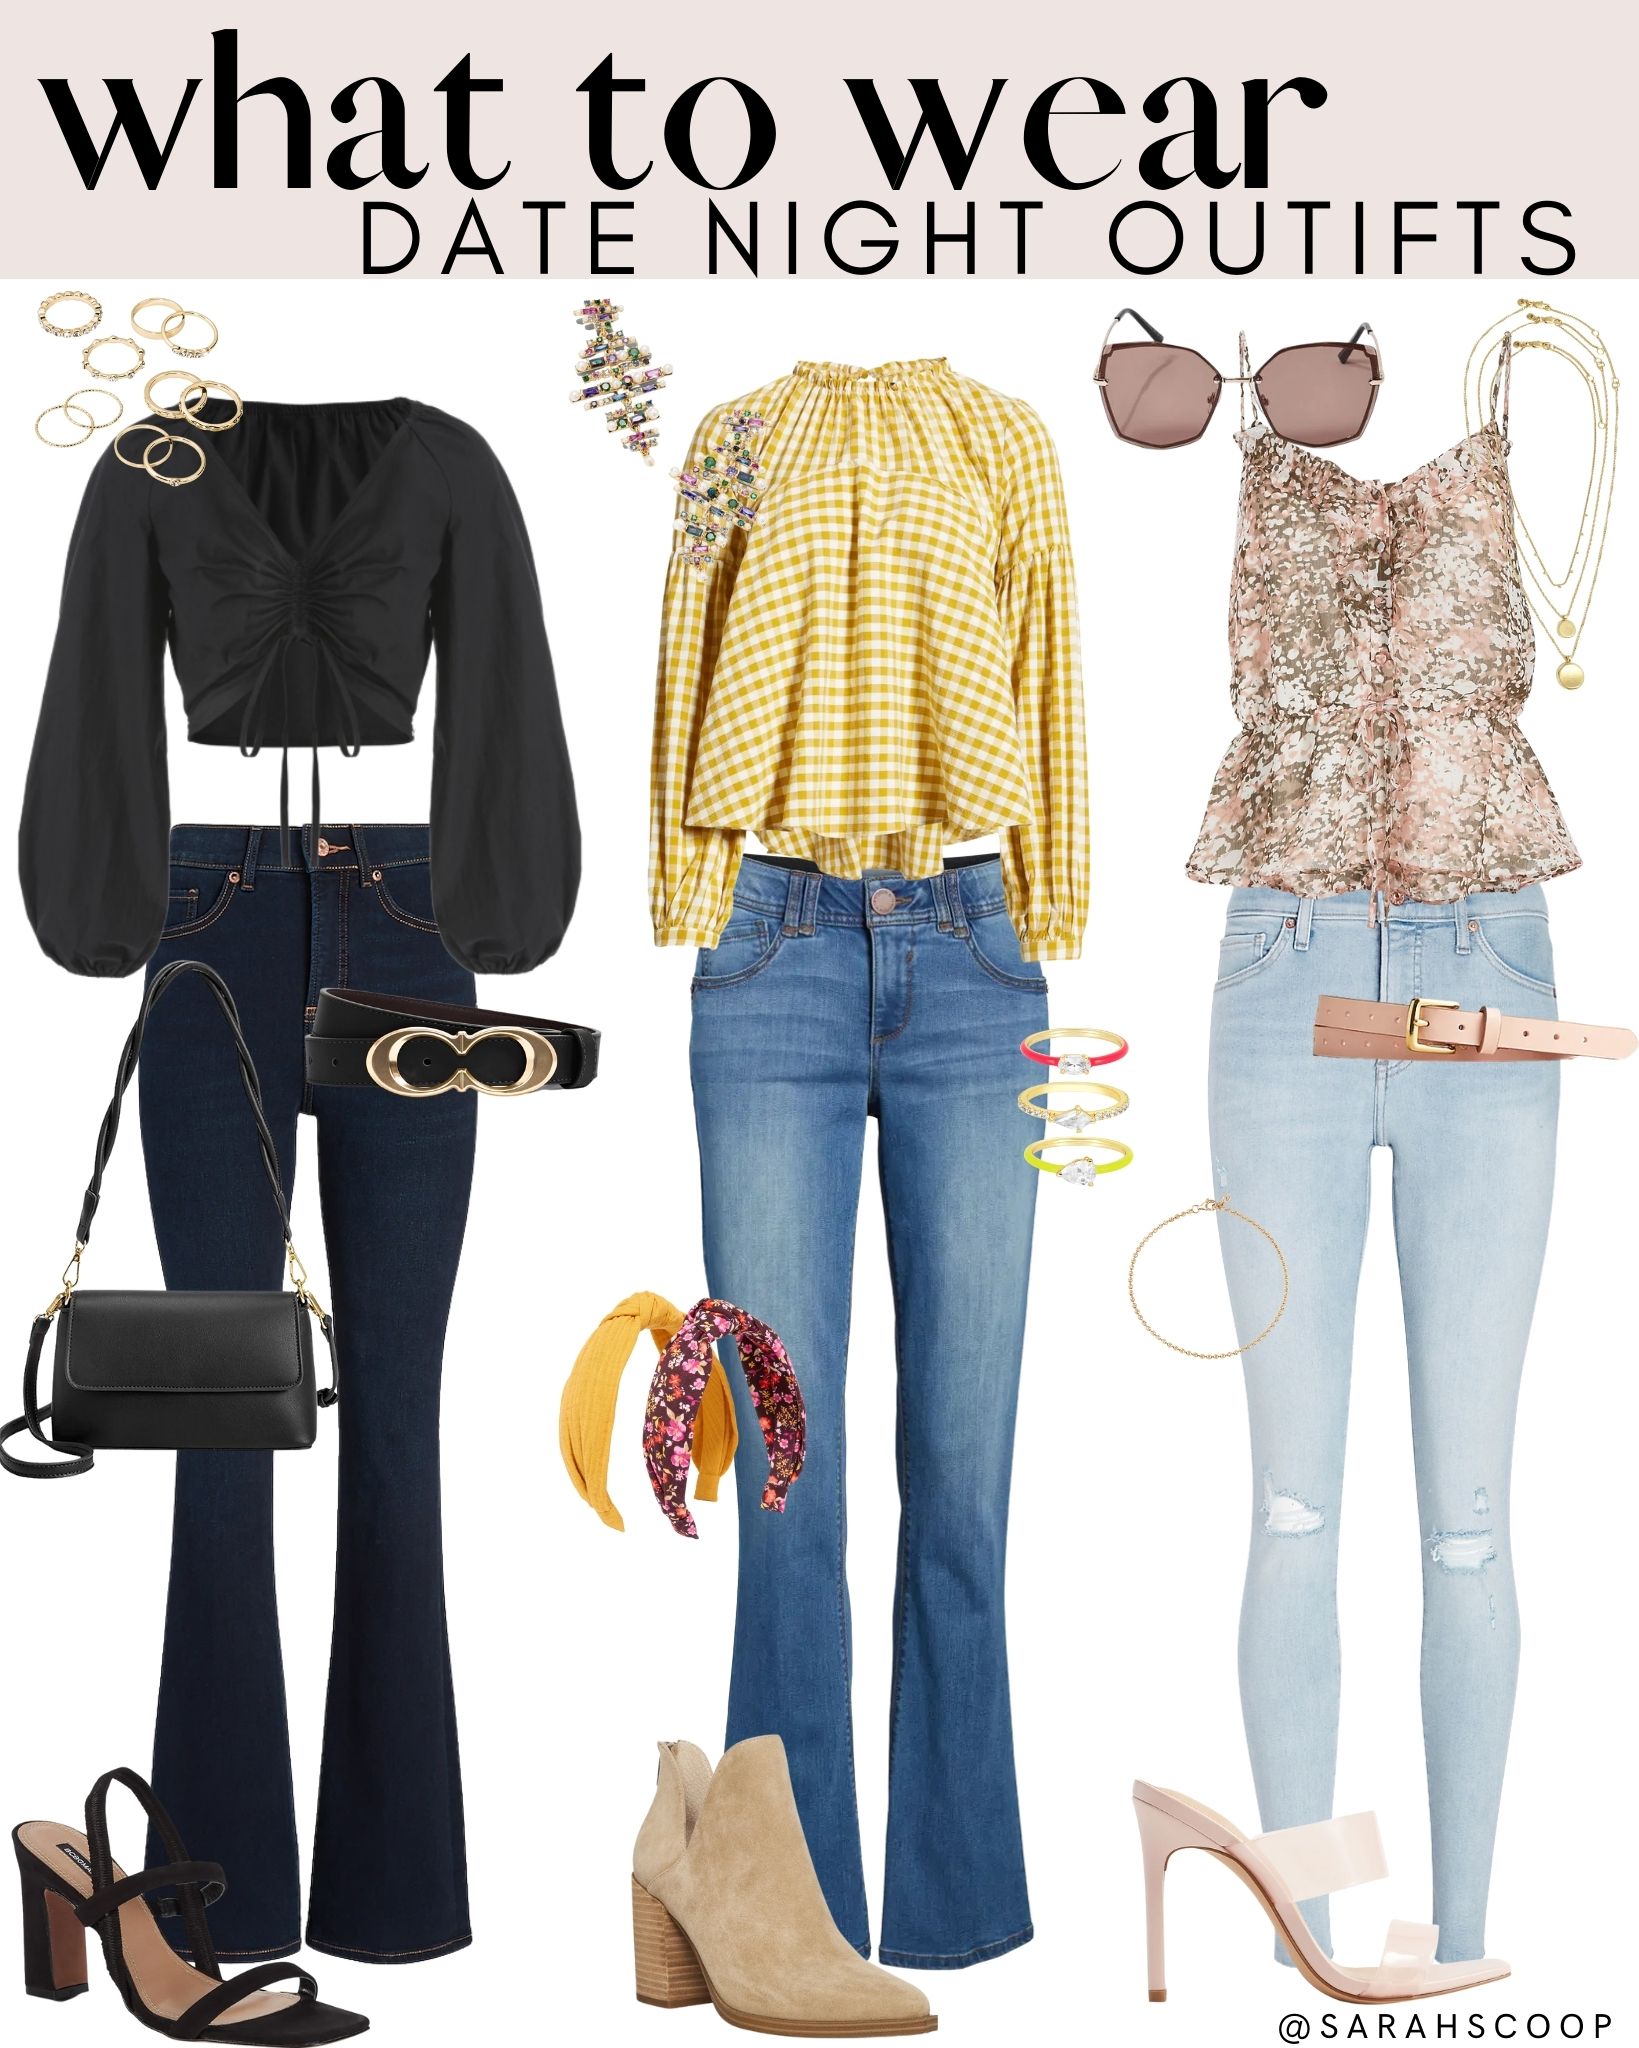 45 Cute Date Night Outfit Ideas | Sarah Scoop